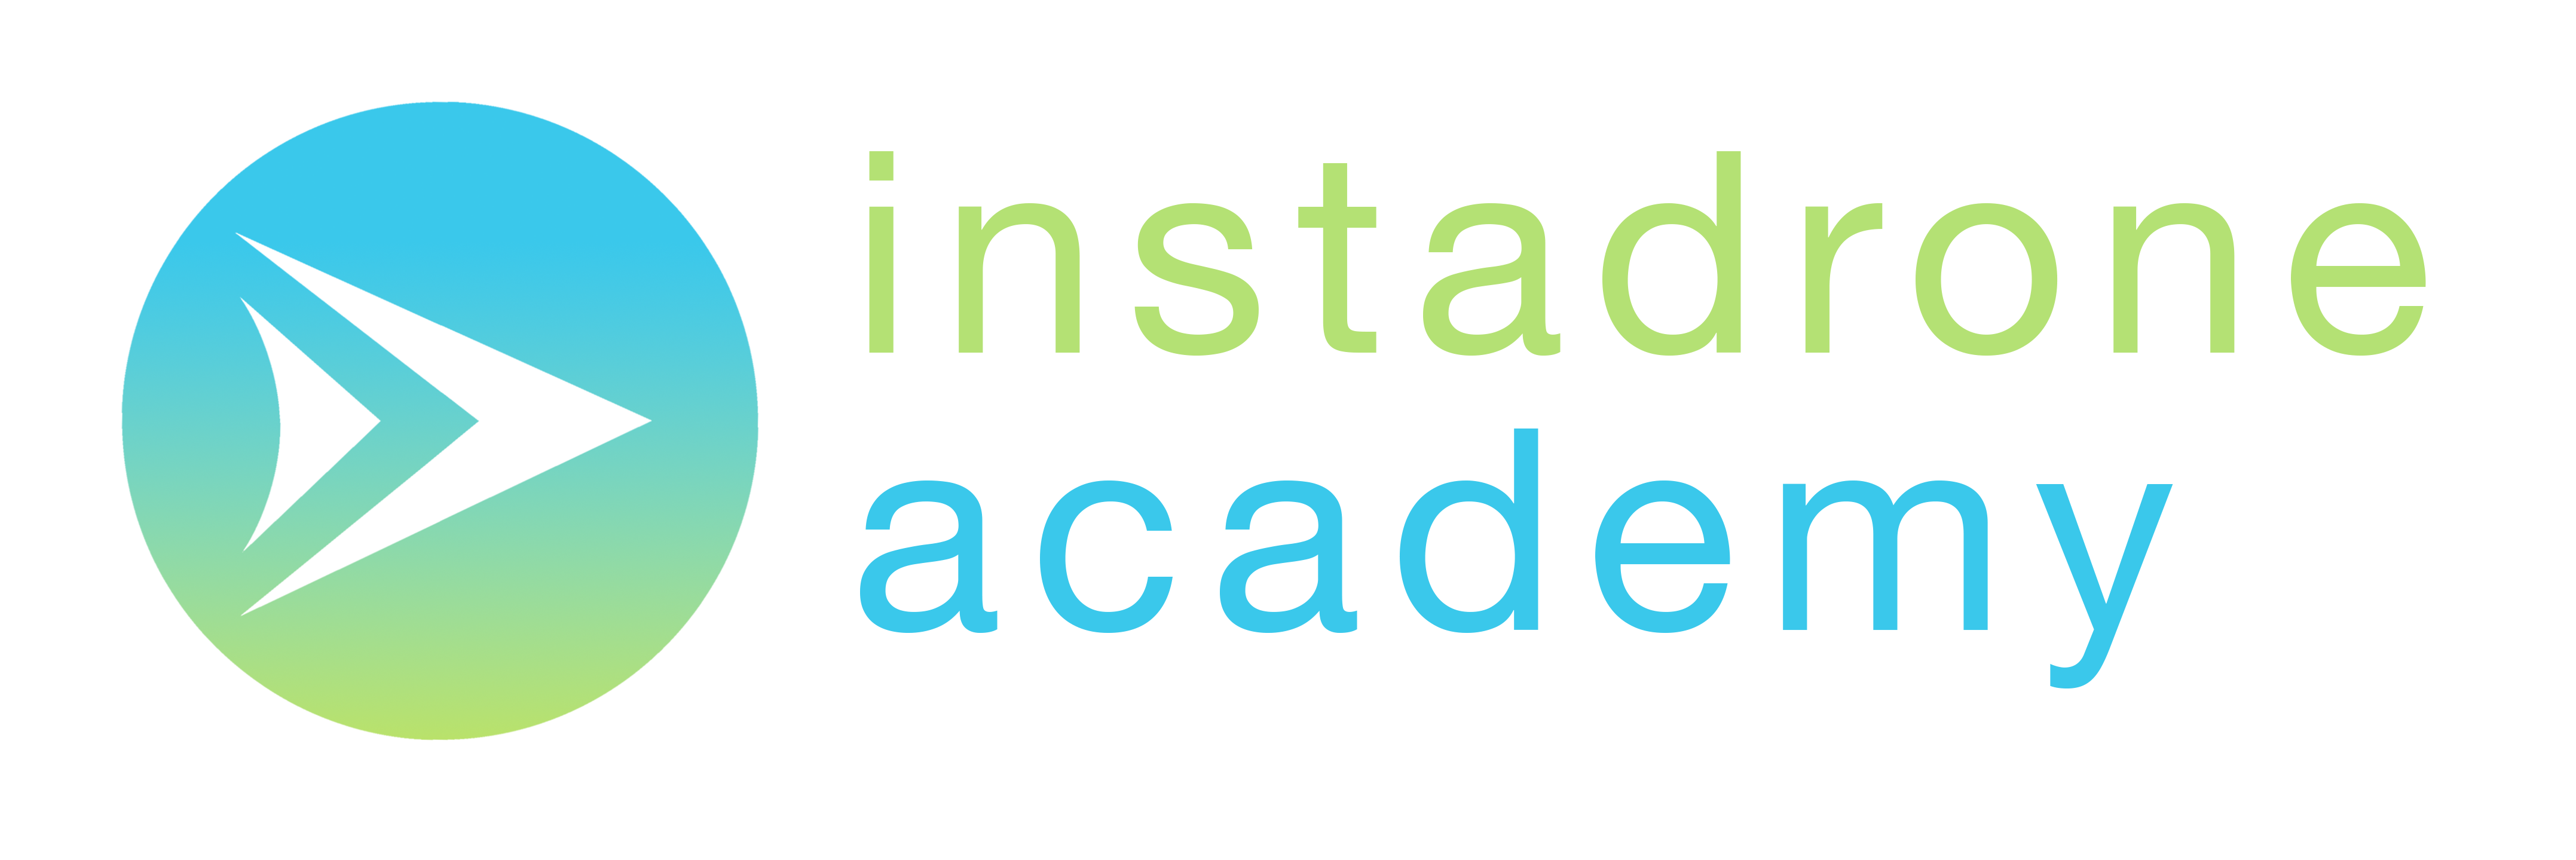 Instadrone Academy logo